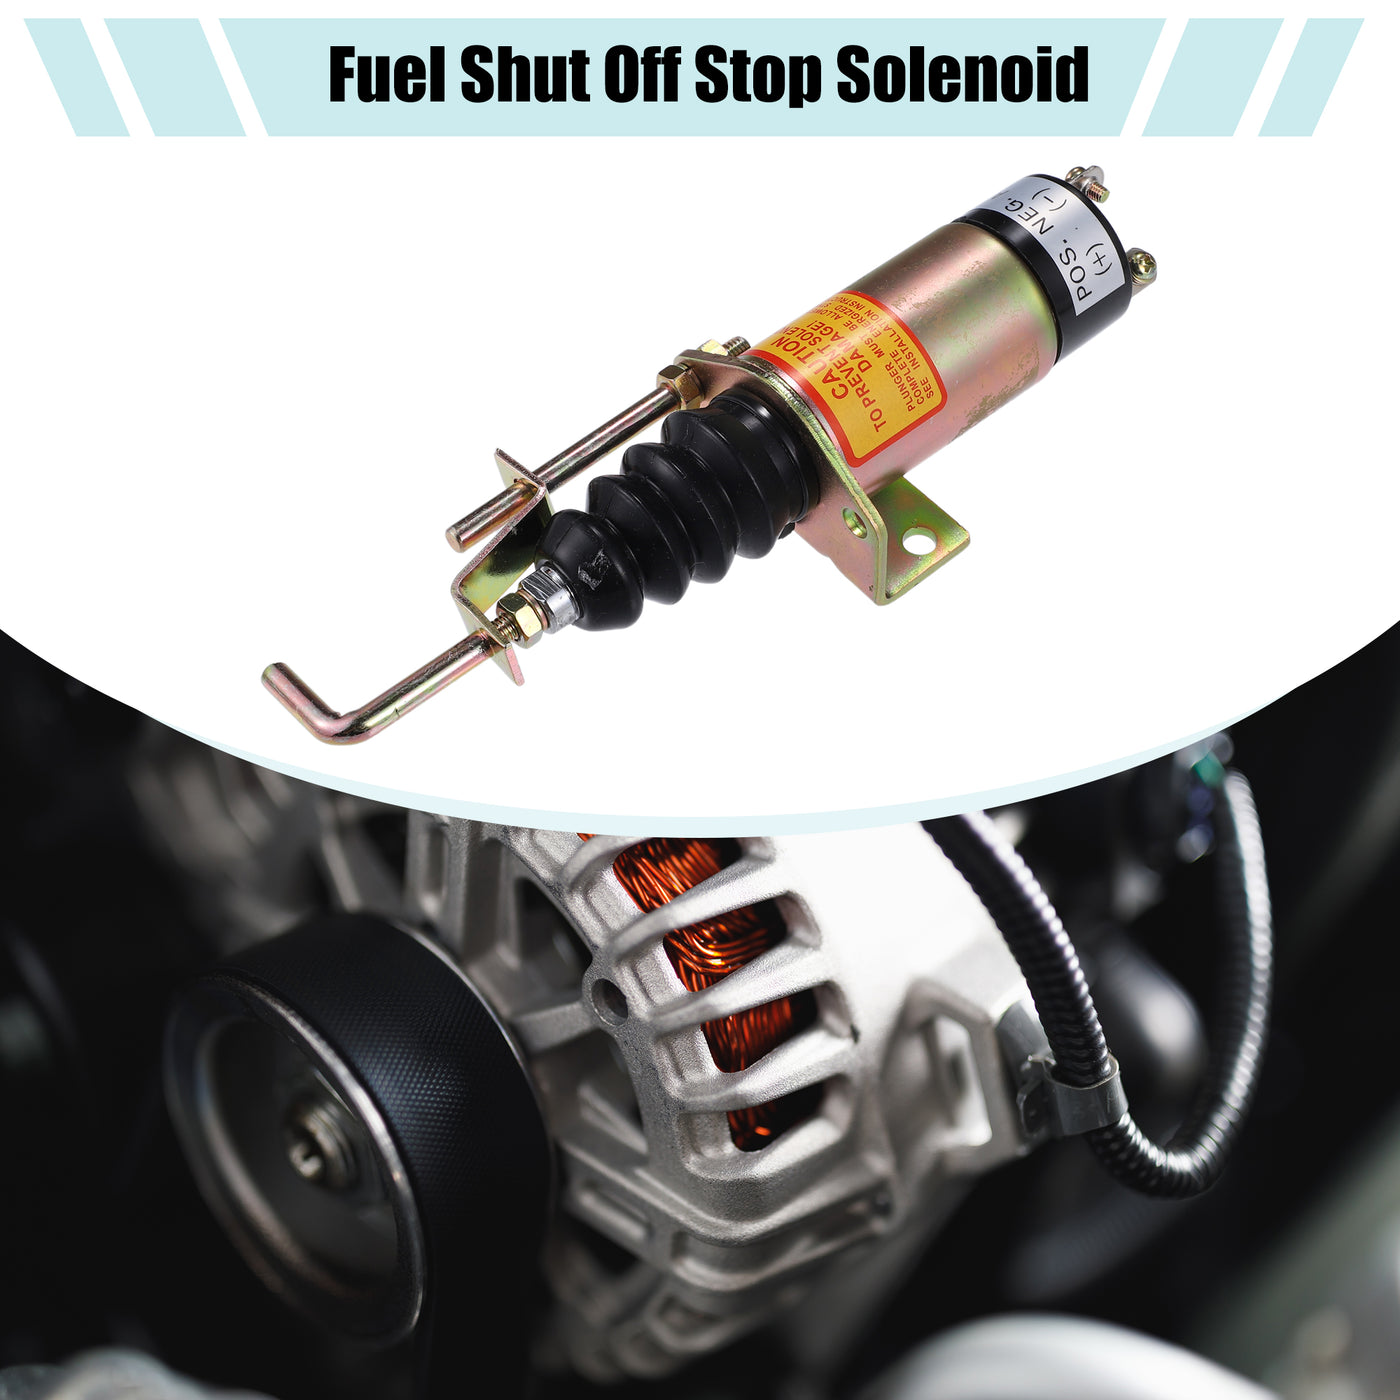 ACROPIX Fuel Shut Off Stop Solenoid Valve 12V 36607197 1502-12C7U2B2S1 Fit for Diesel Engine - Pack of 1 Bronze Tone